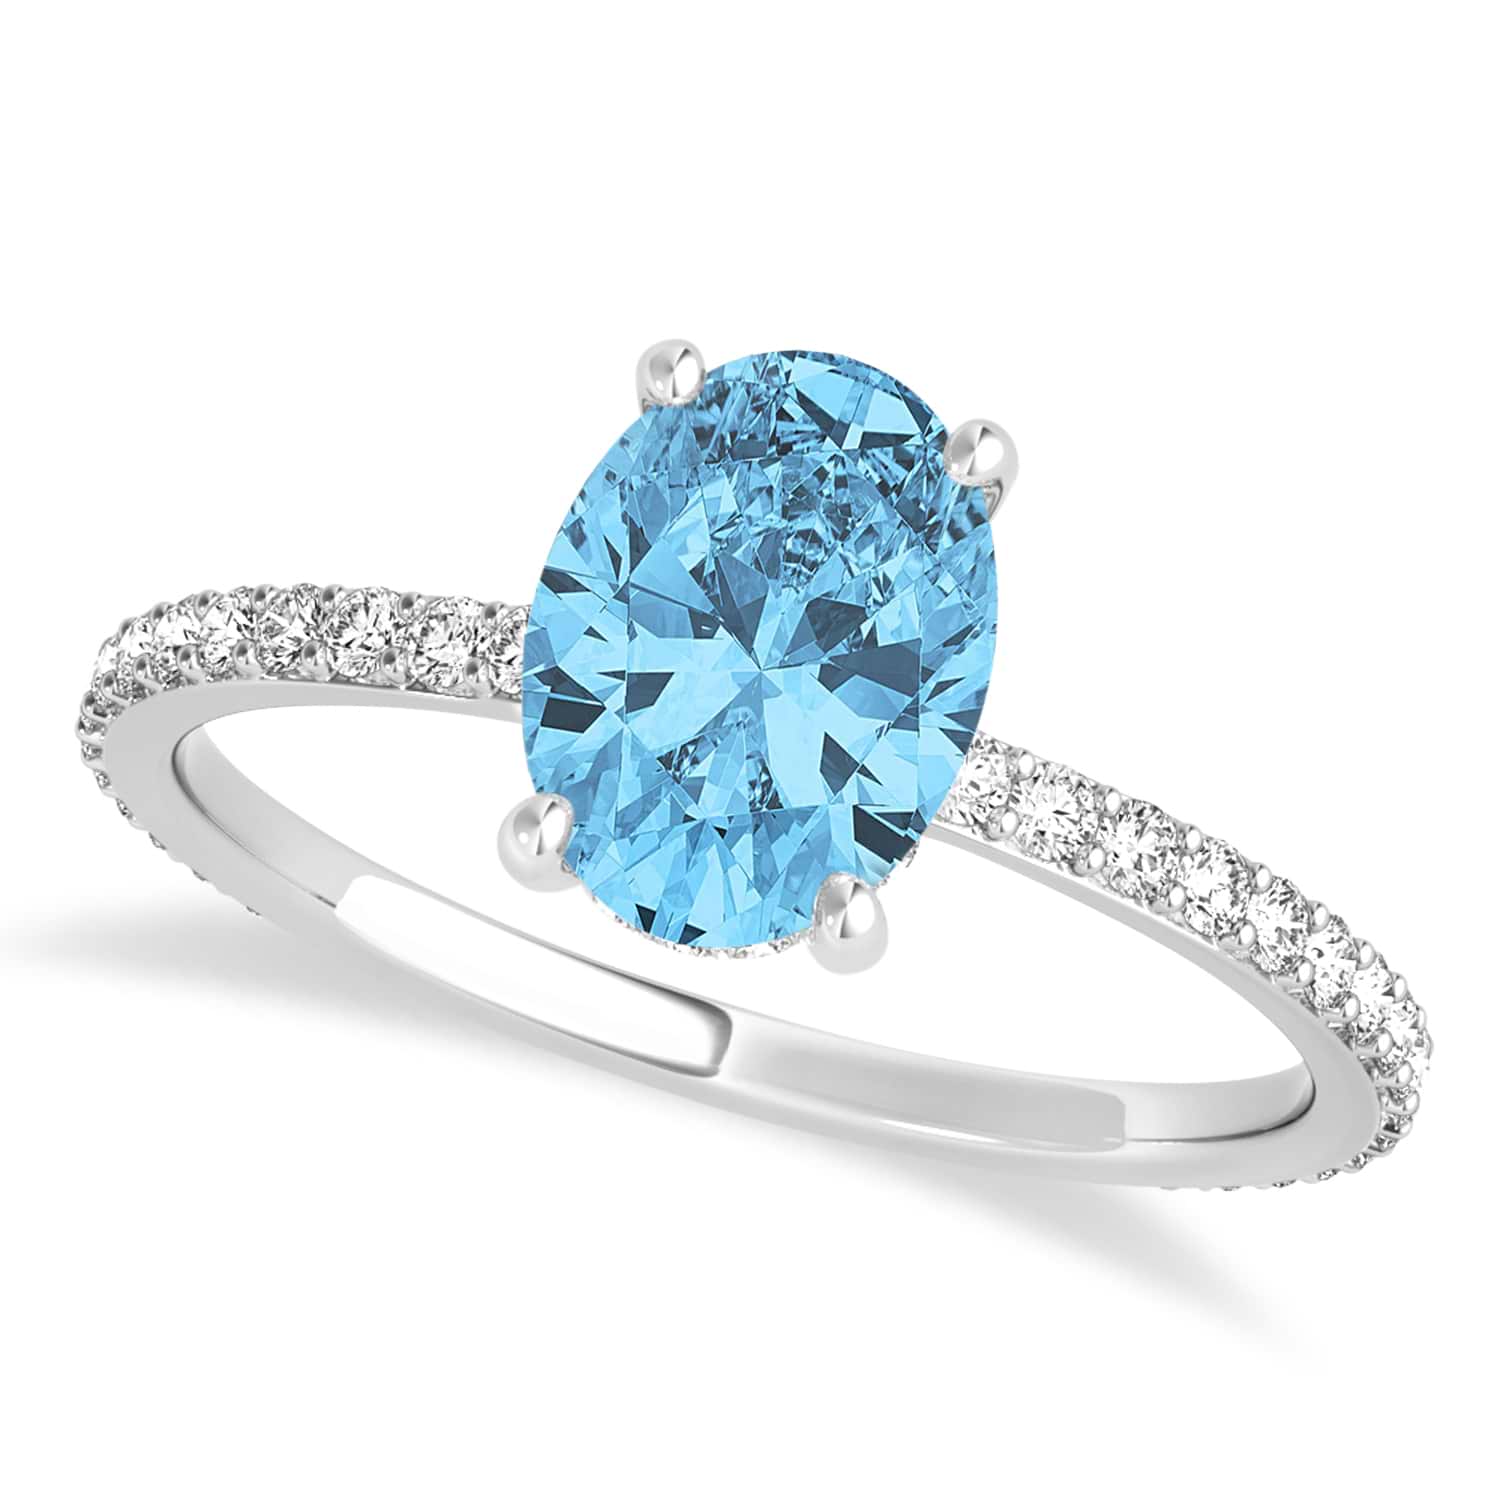 Oval Blue Topaz & Diamond Hidden Halo Engagement Ring 18k White Gold (0.76ct)